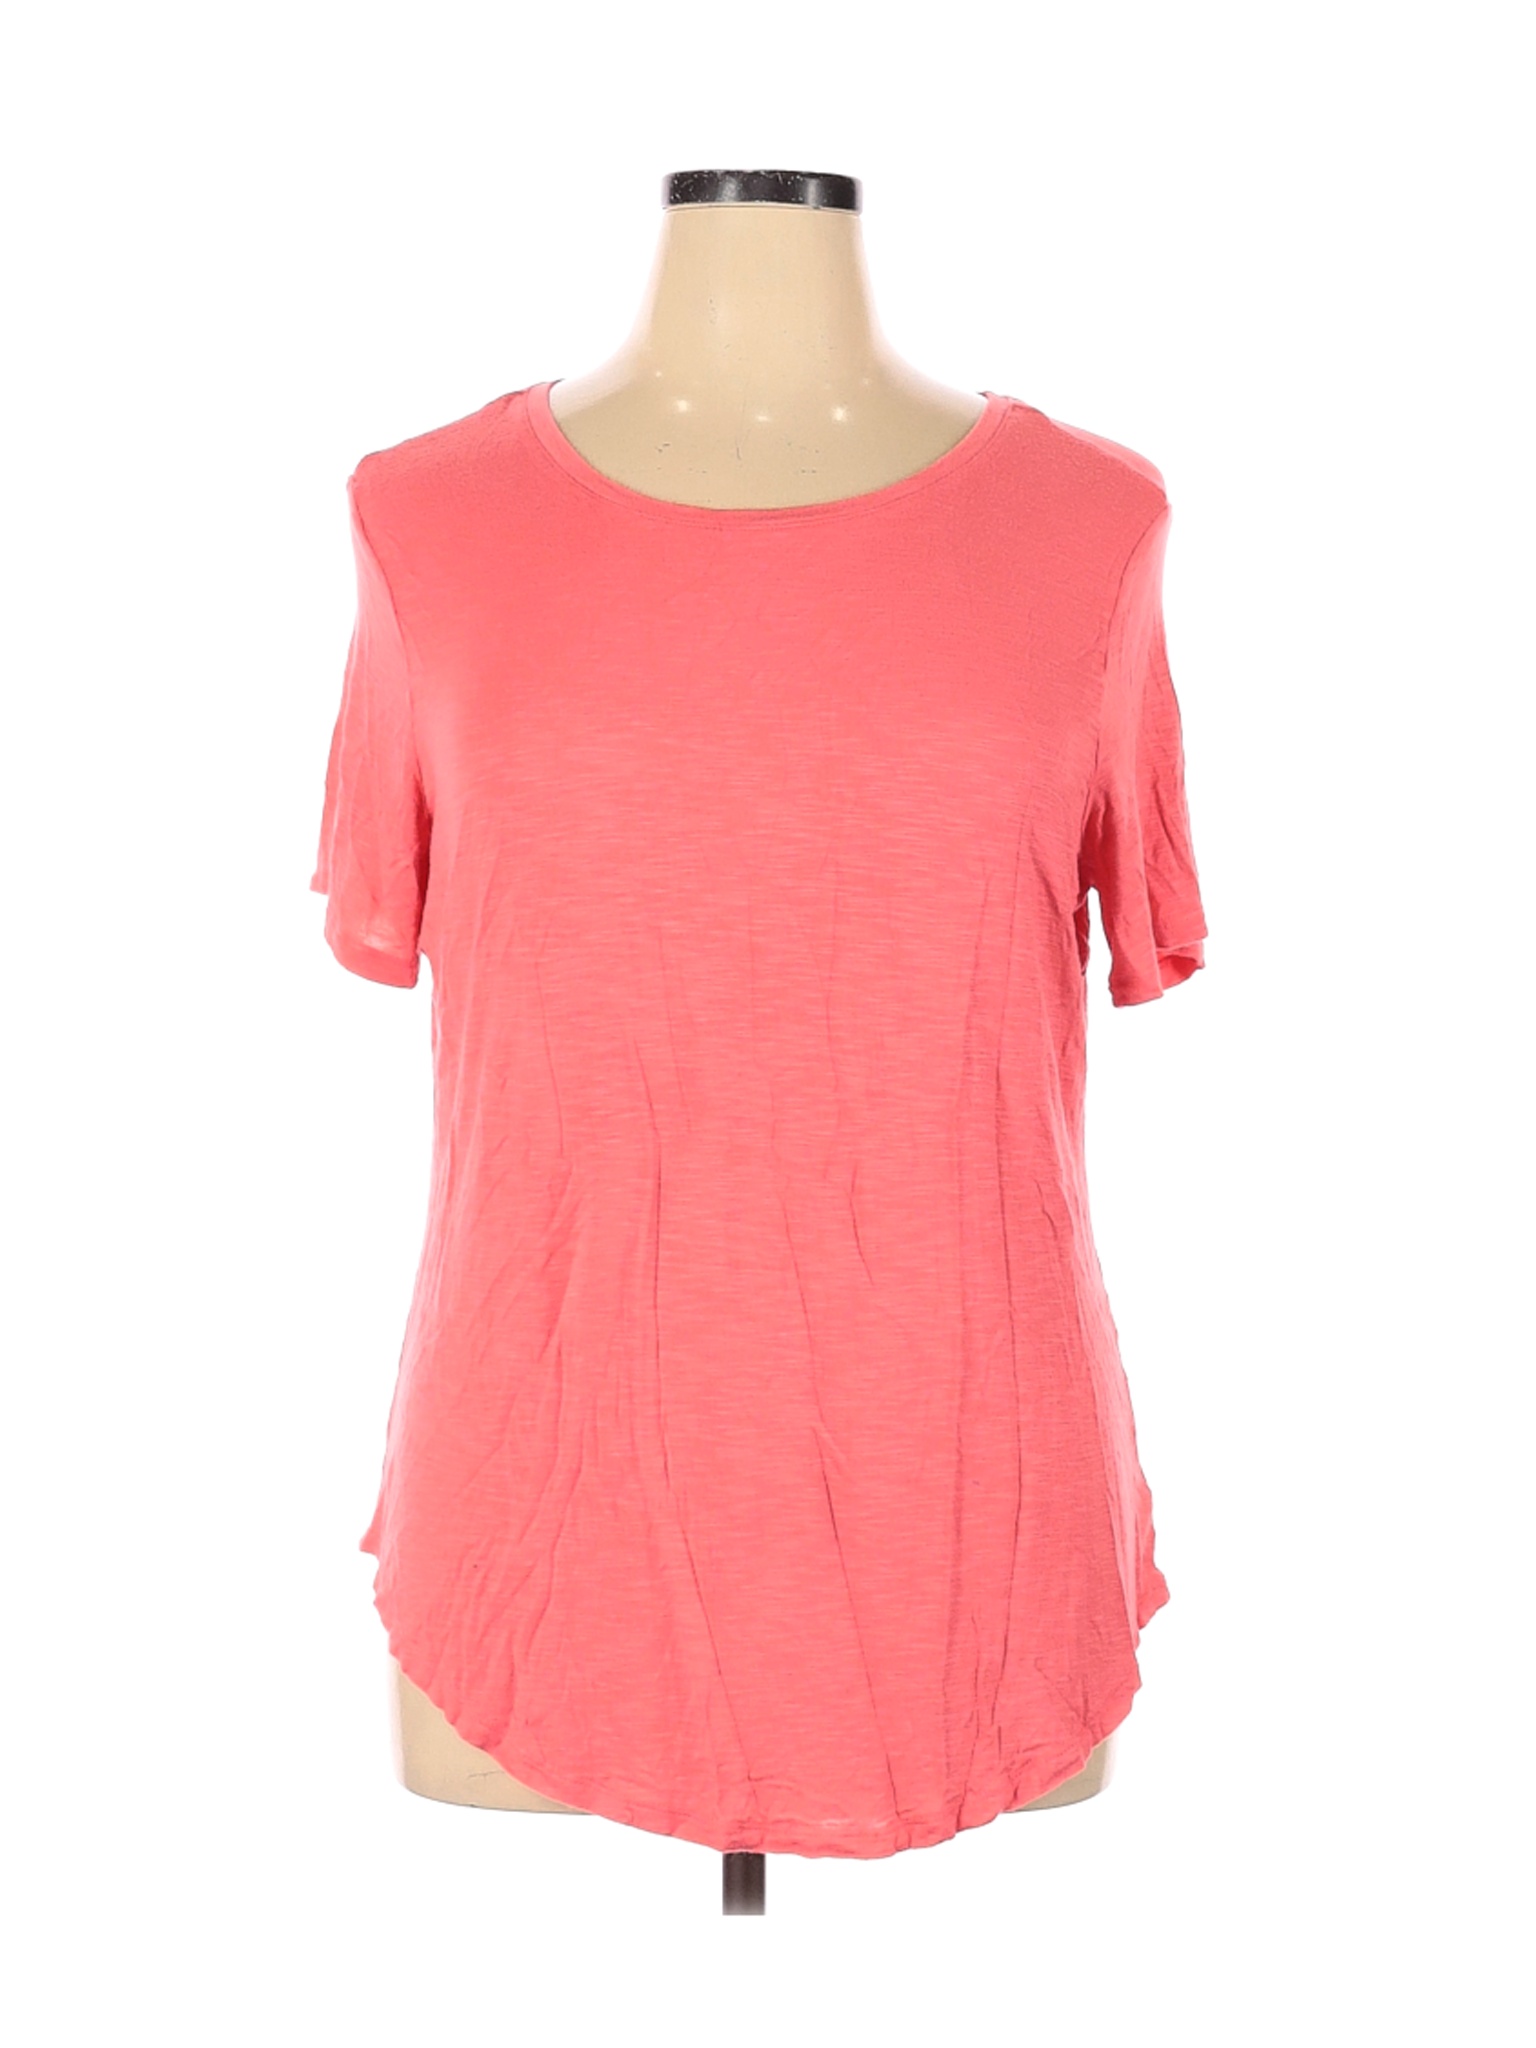 Old Navy Women Pink Short Sleeve T-Shirt XL | eBay